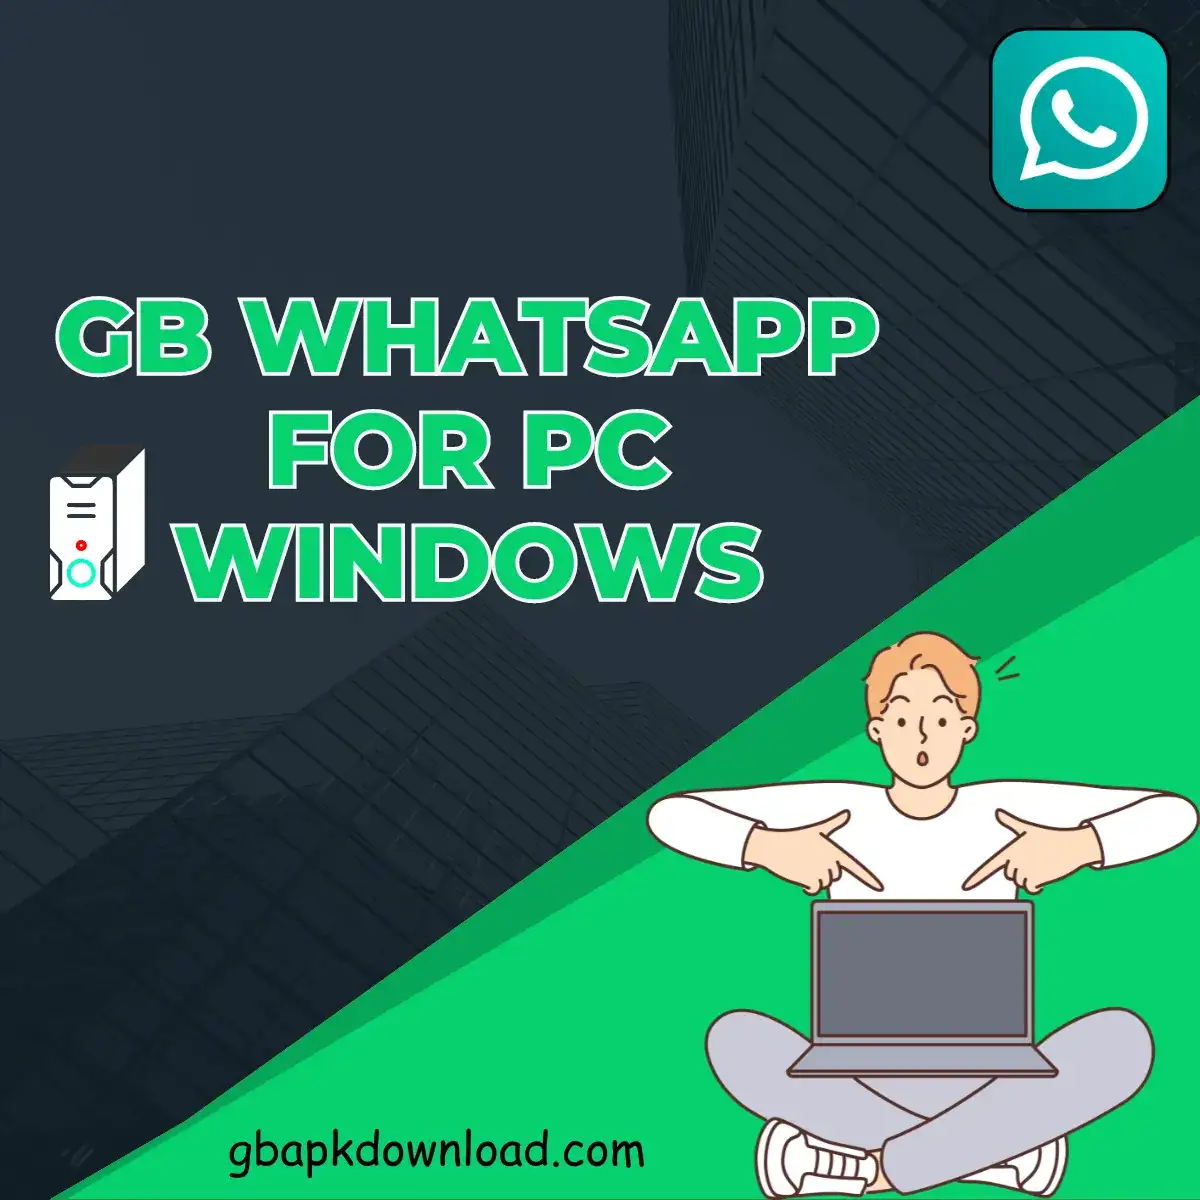 GB WhatsApp for PC / Windows